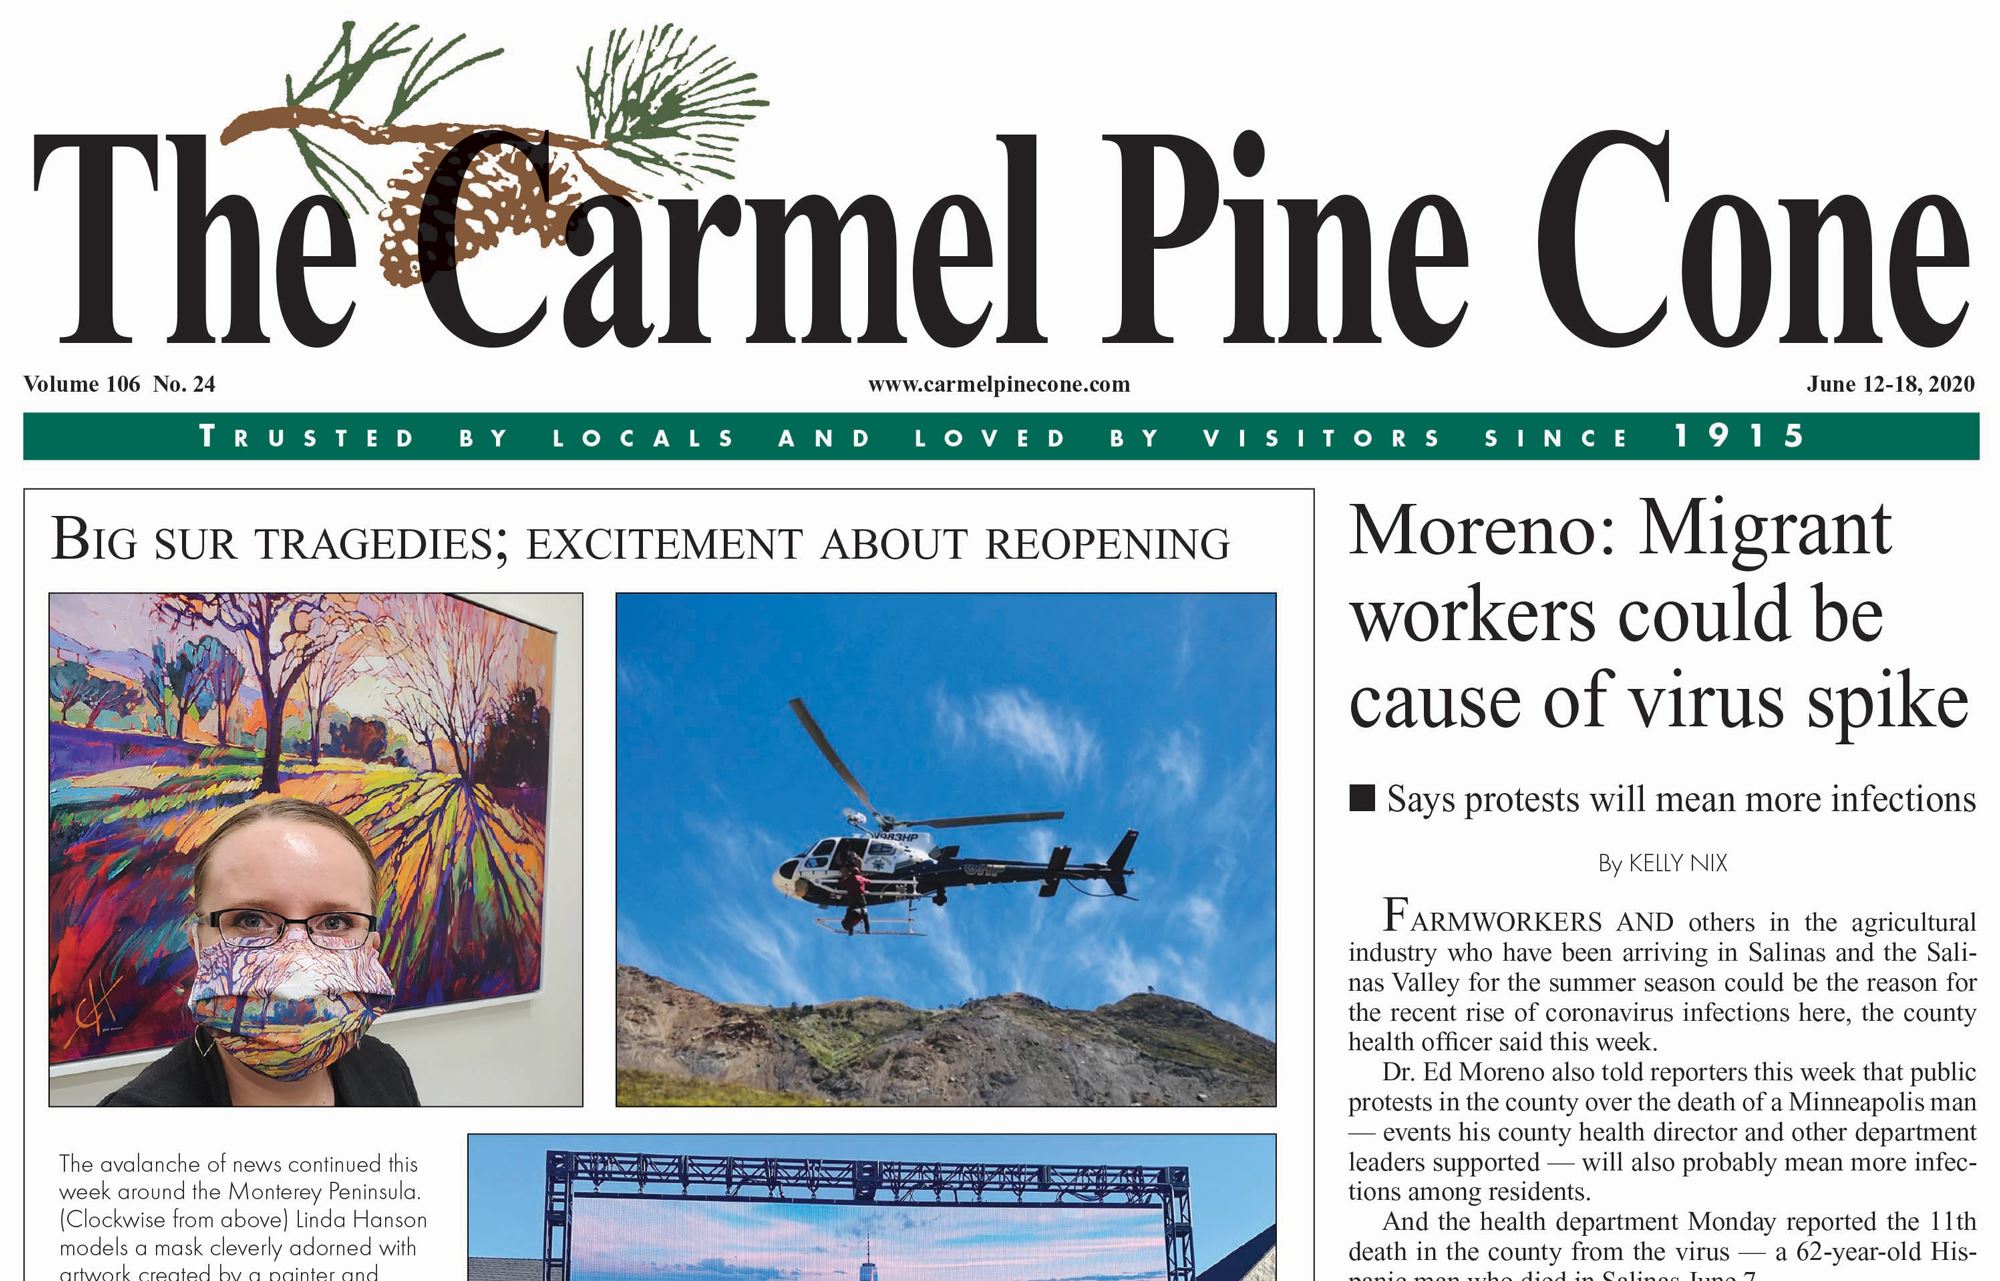 Headline from The Carmel Pine Cone